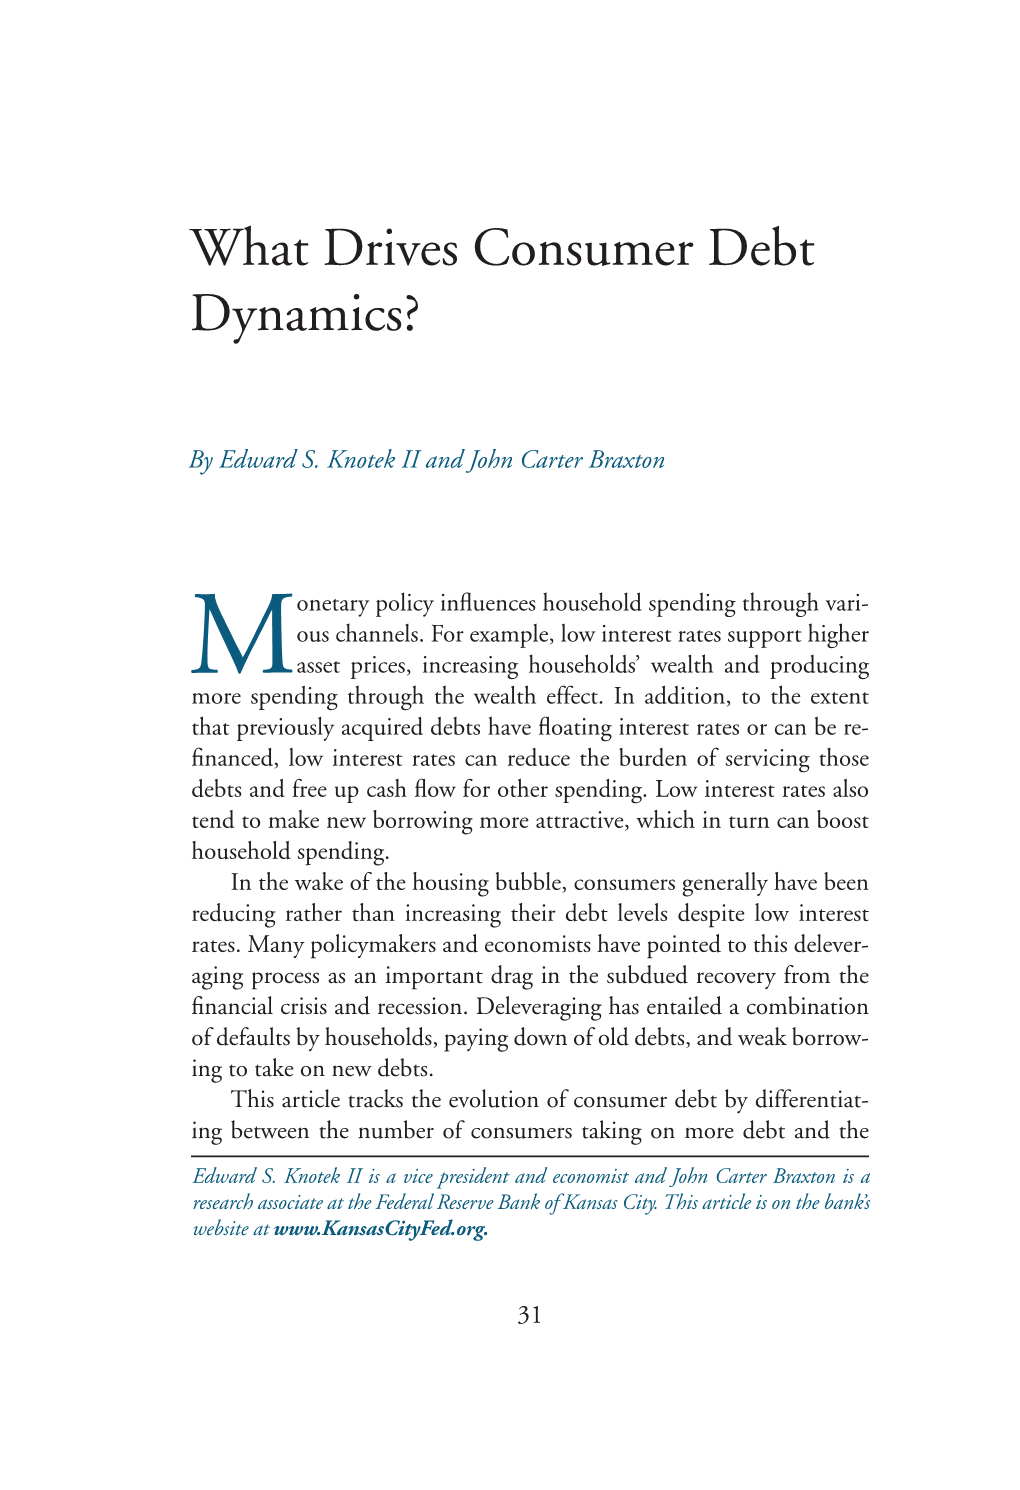 What Drives Consumer Debt Dynamics?